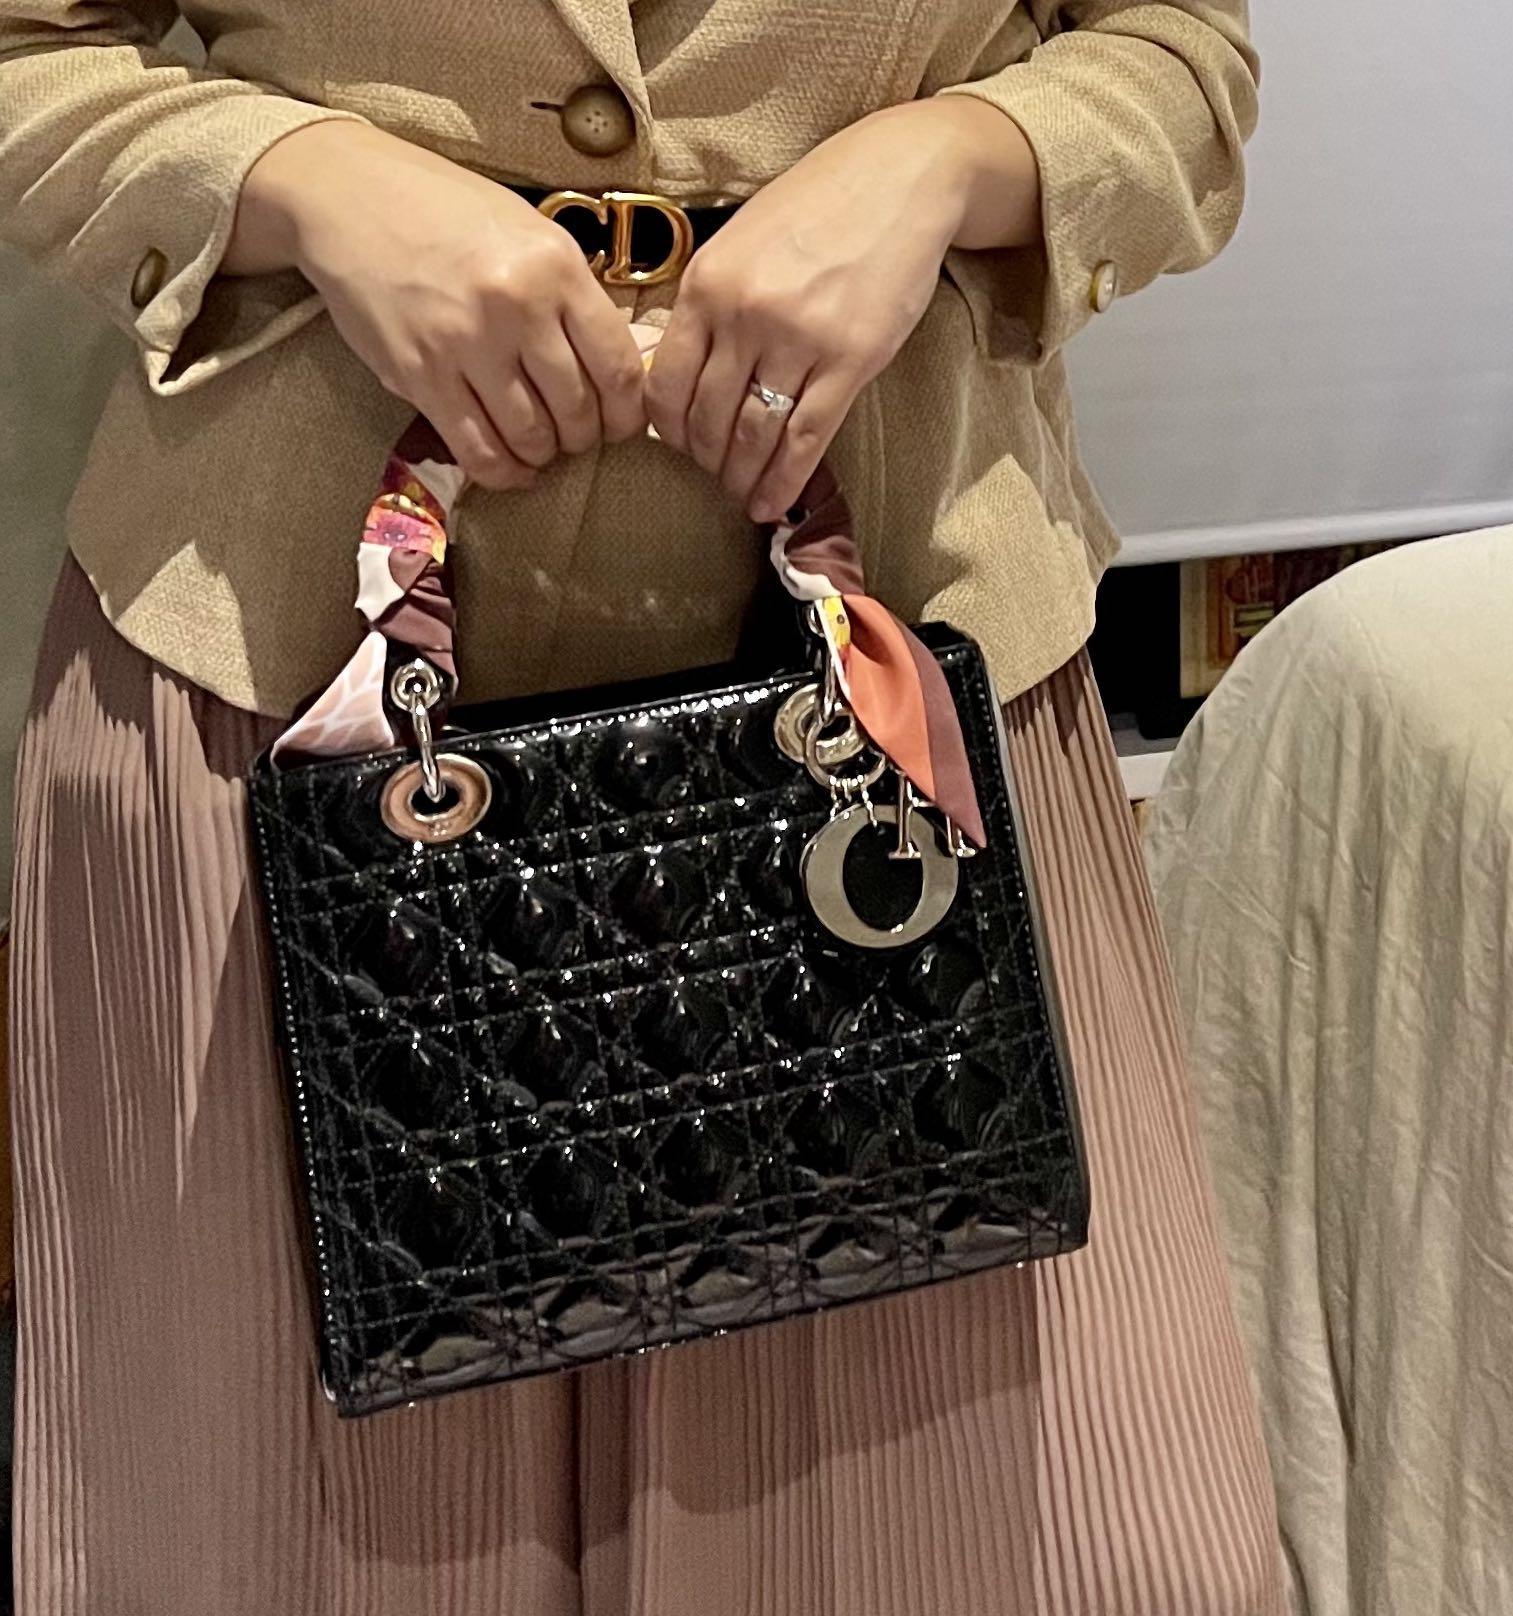 Dior Lady Bag Small Black Patent  Nice Bag